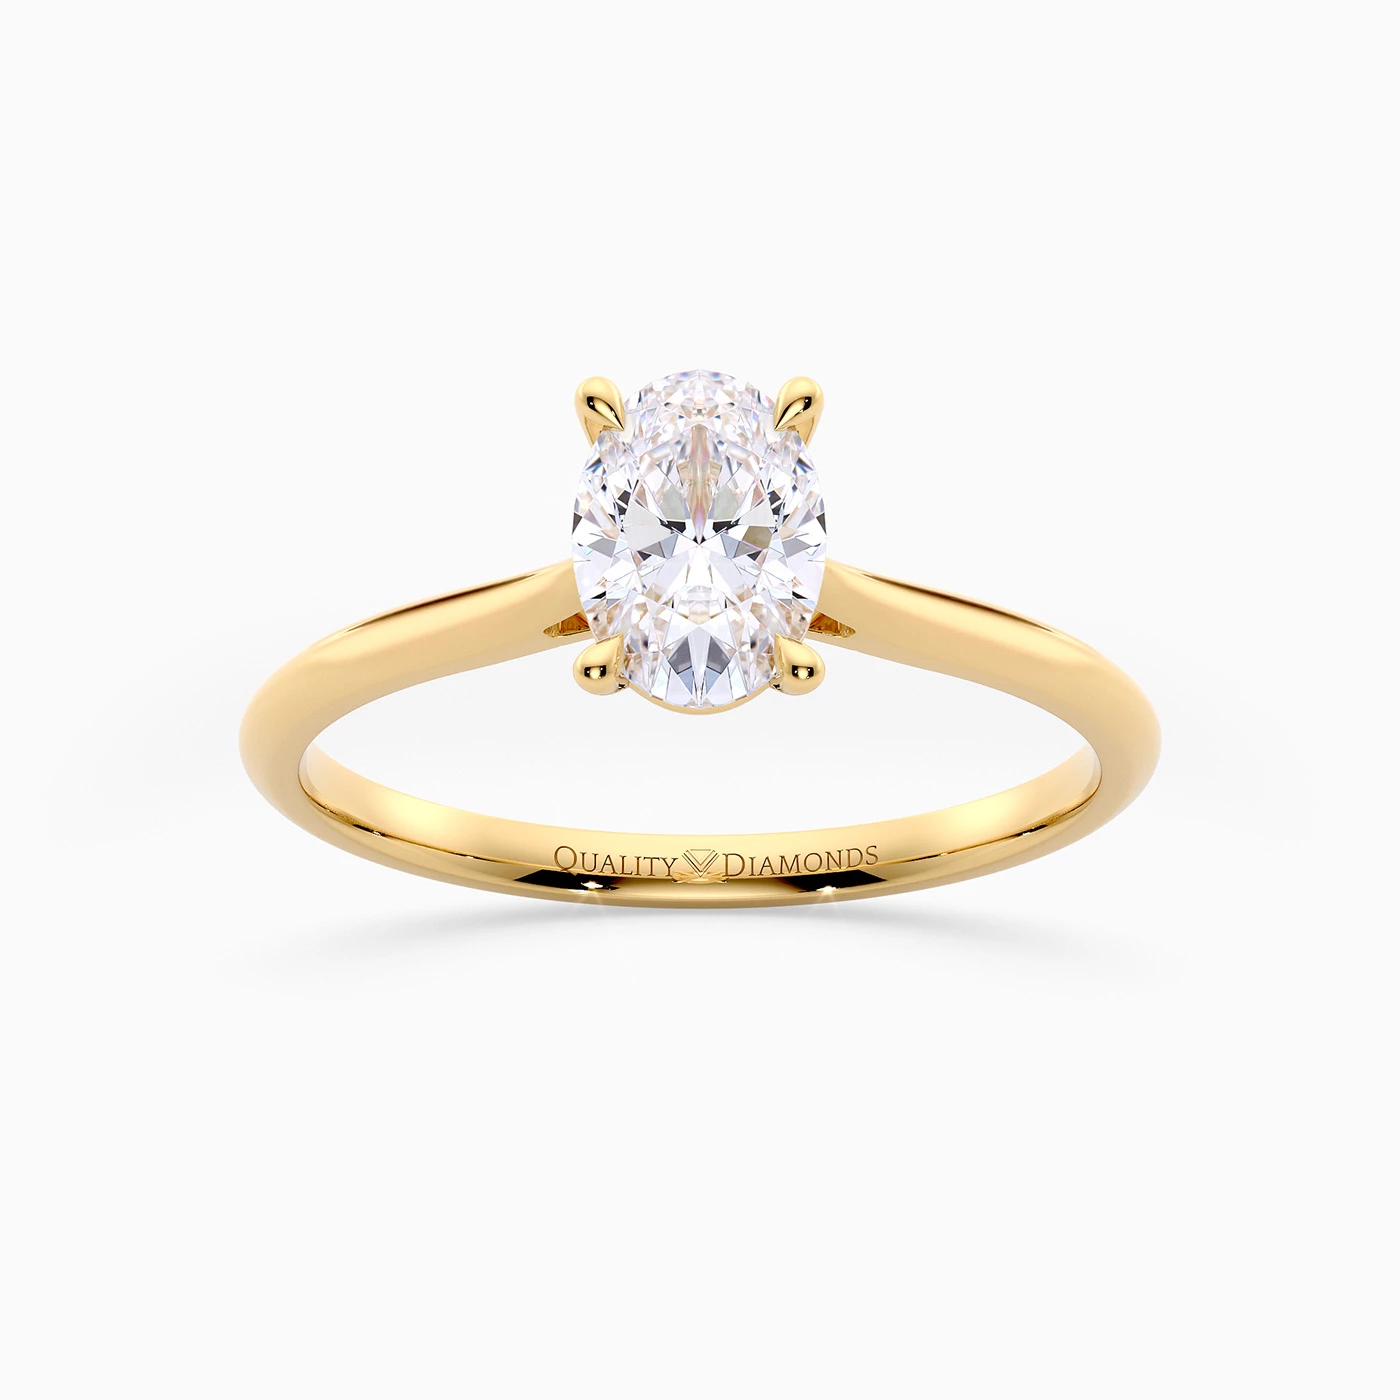 Oval Carys Diamond Ring in 18K Yellow Gold